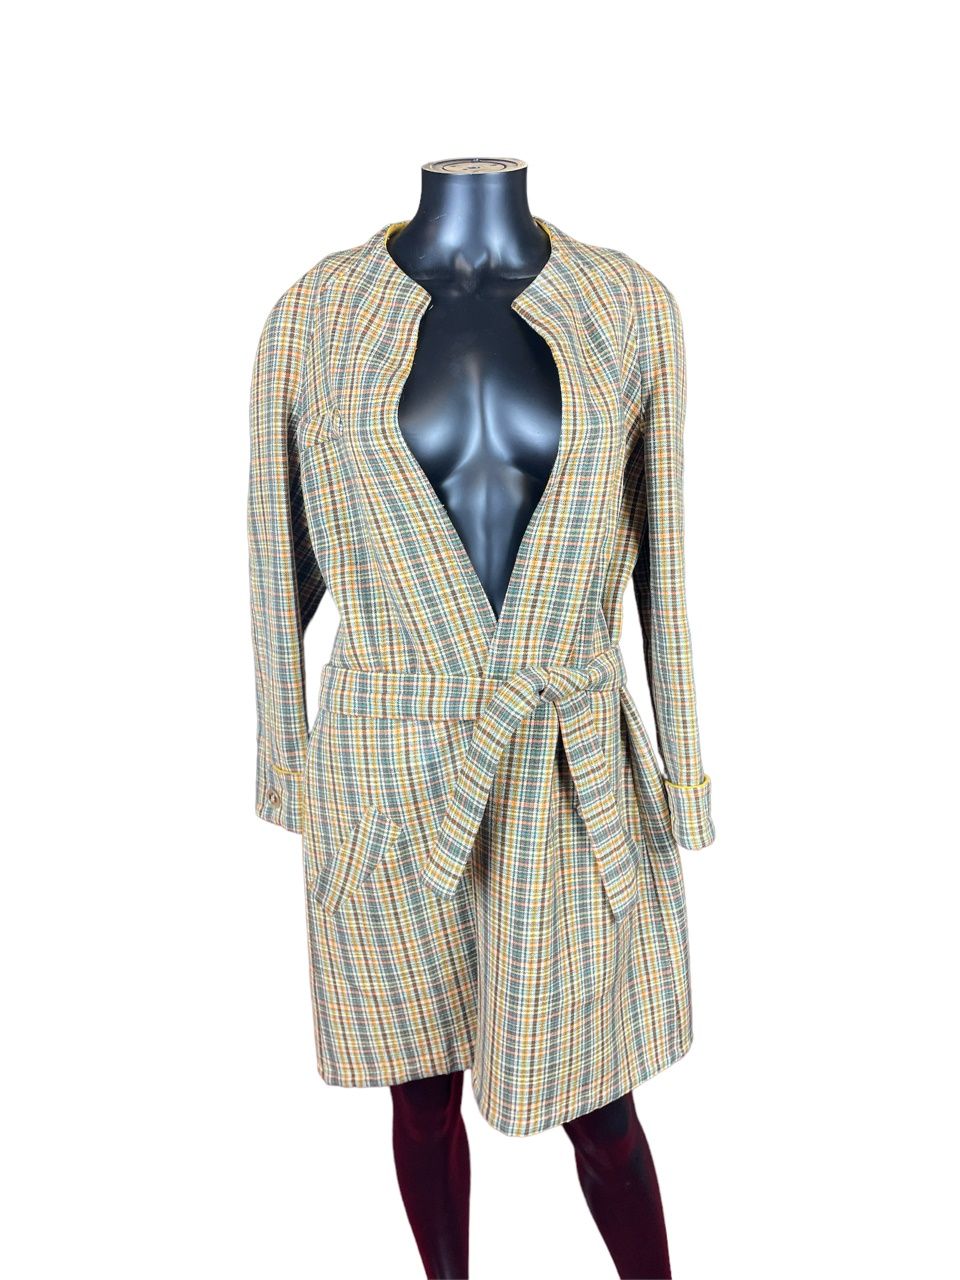 Null 巴黎爱马仕 
格子呢印花羊毛大衣，圆领，有两个贴袋和腰带，可翻转。
T.36
状况良好